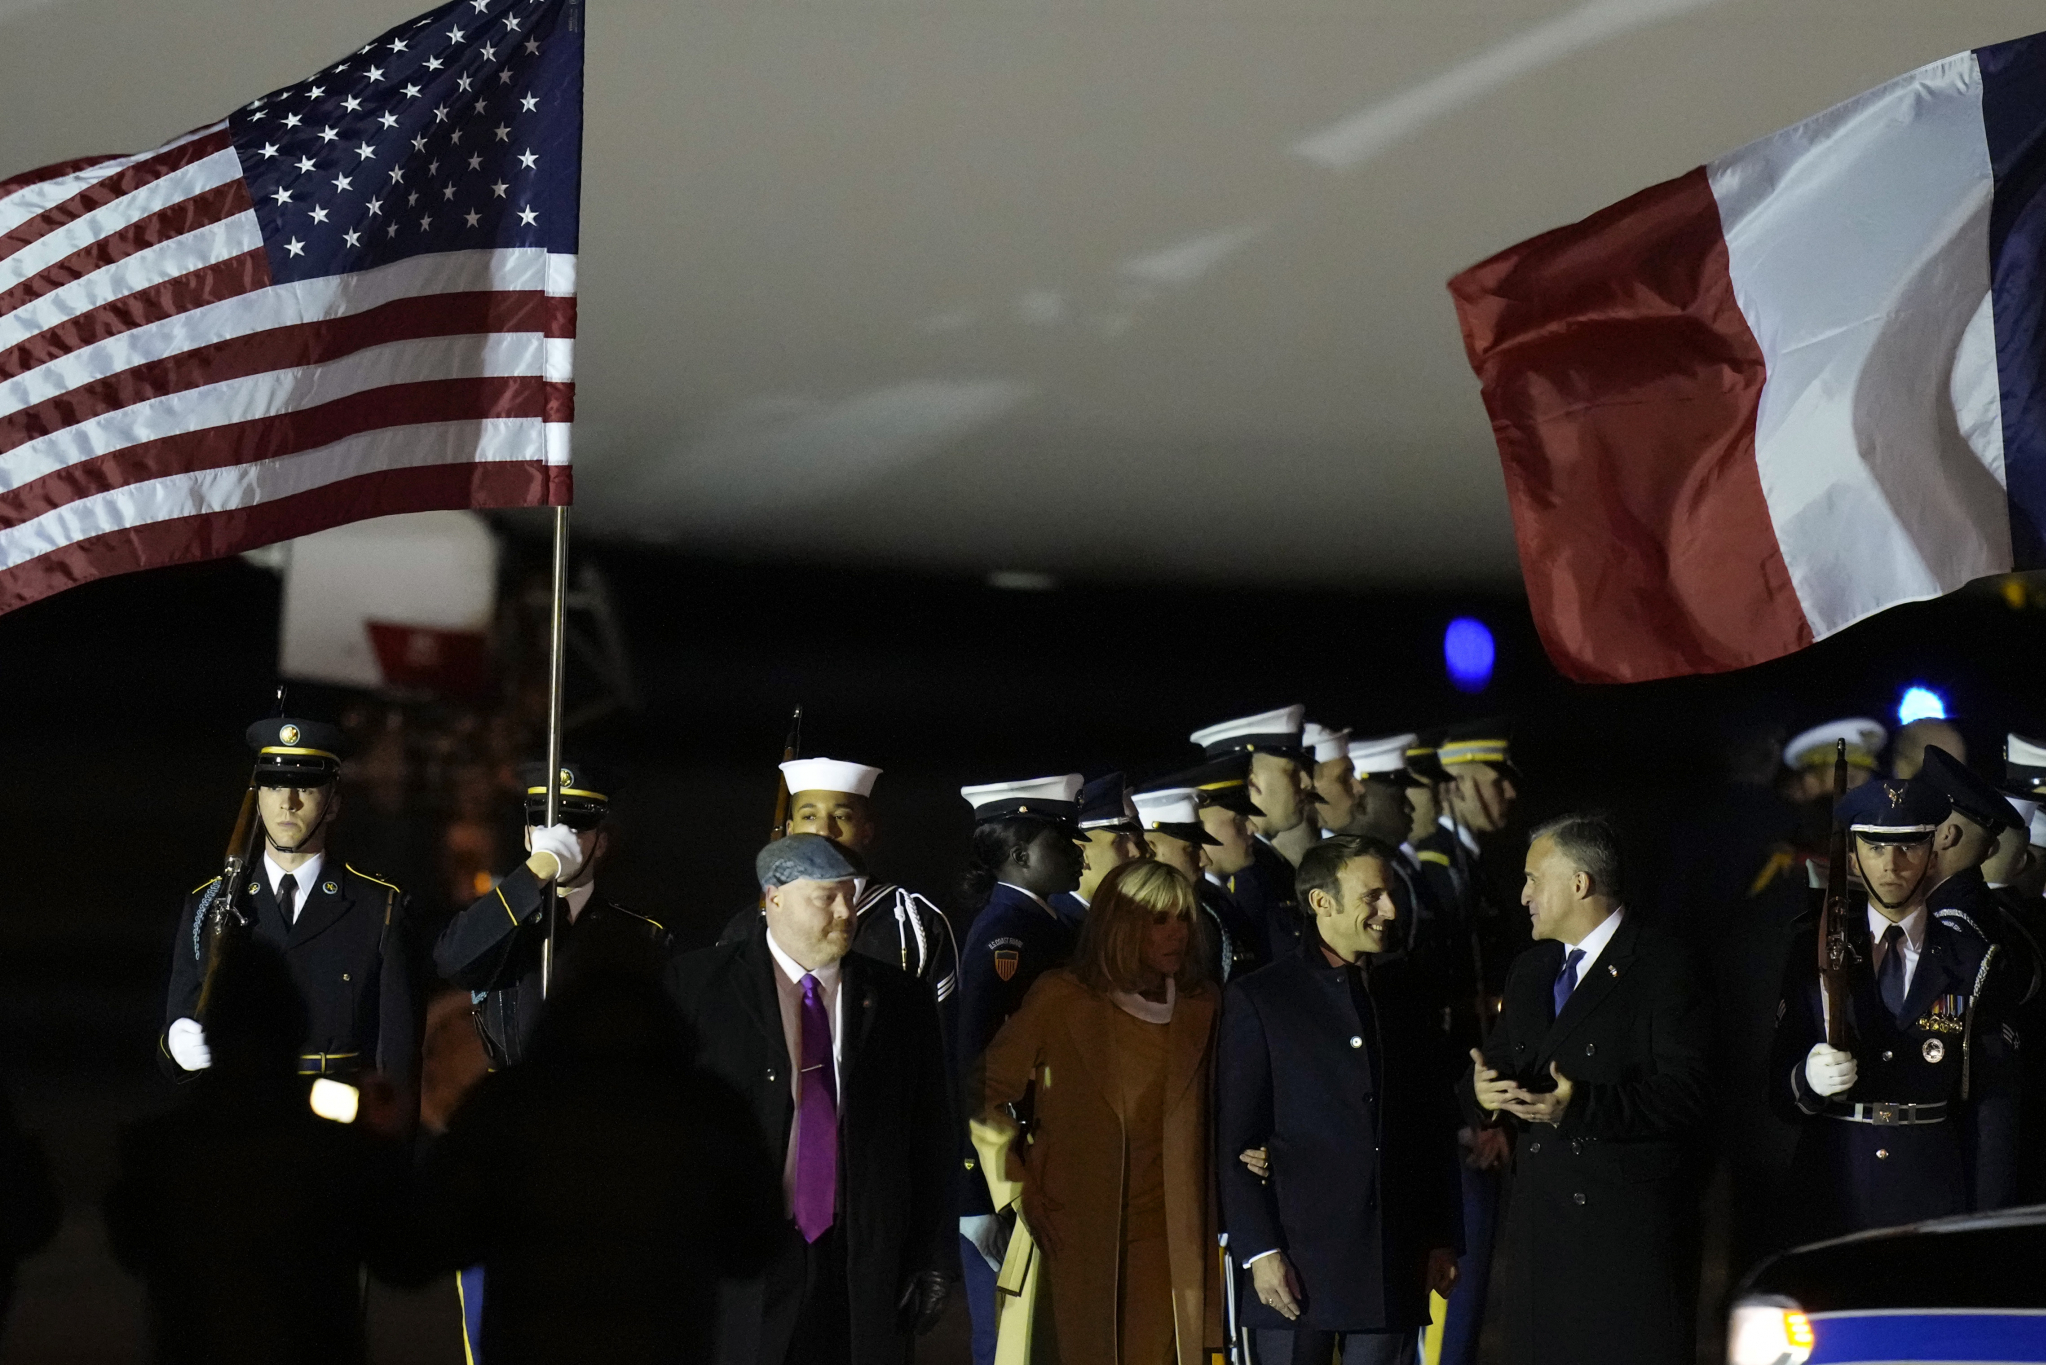 PRIJATELJSTVO PRE EKONOMIJE Predsednik Francuske Makron u zvaničnoj poseti SAD - prvi put od početka Bajdenovog mandata